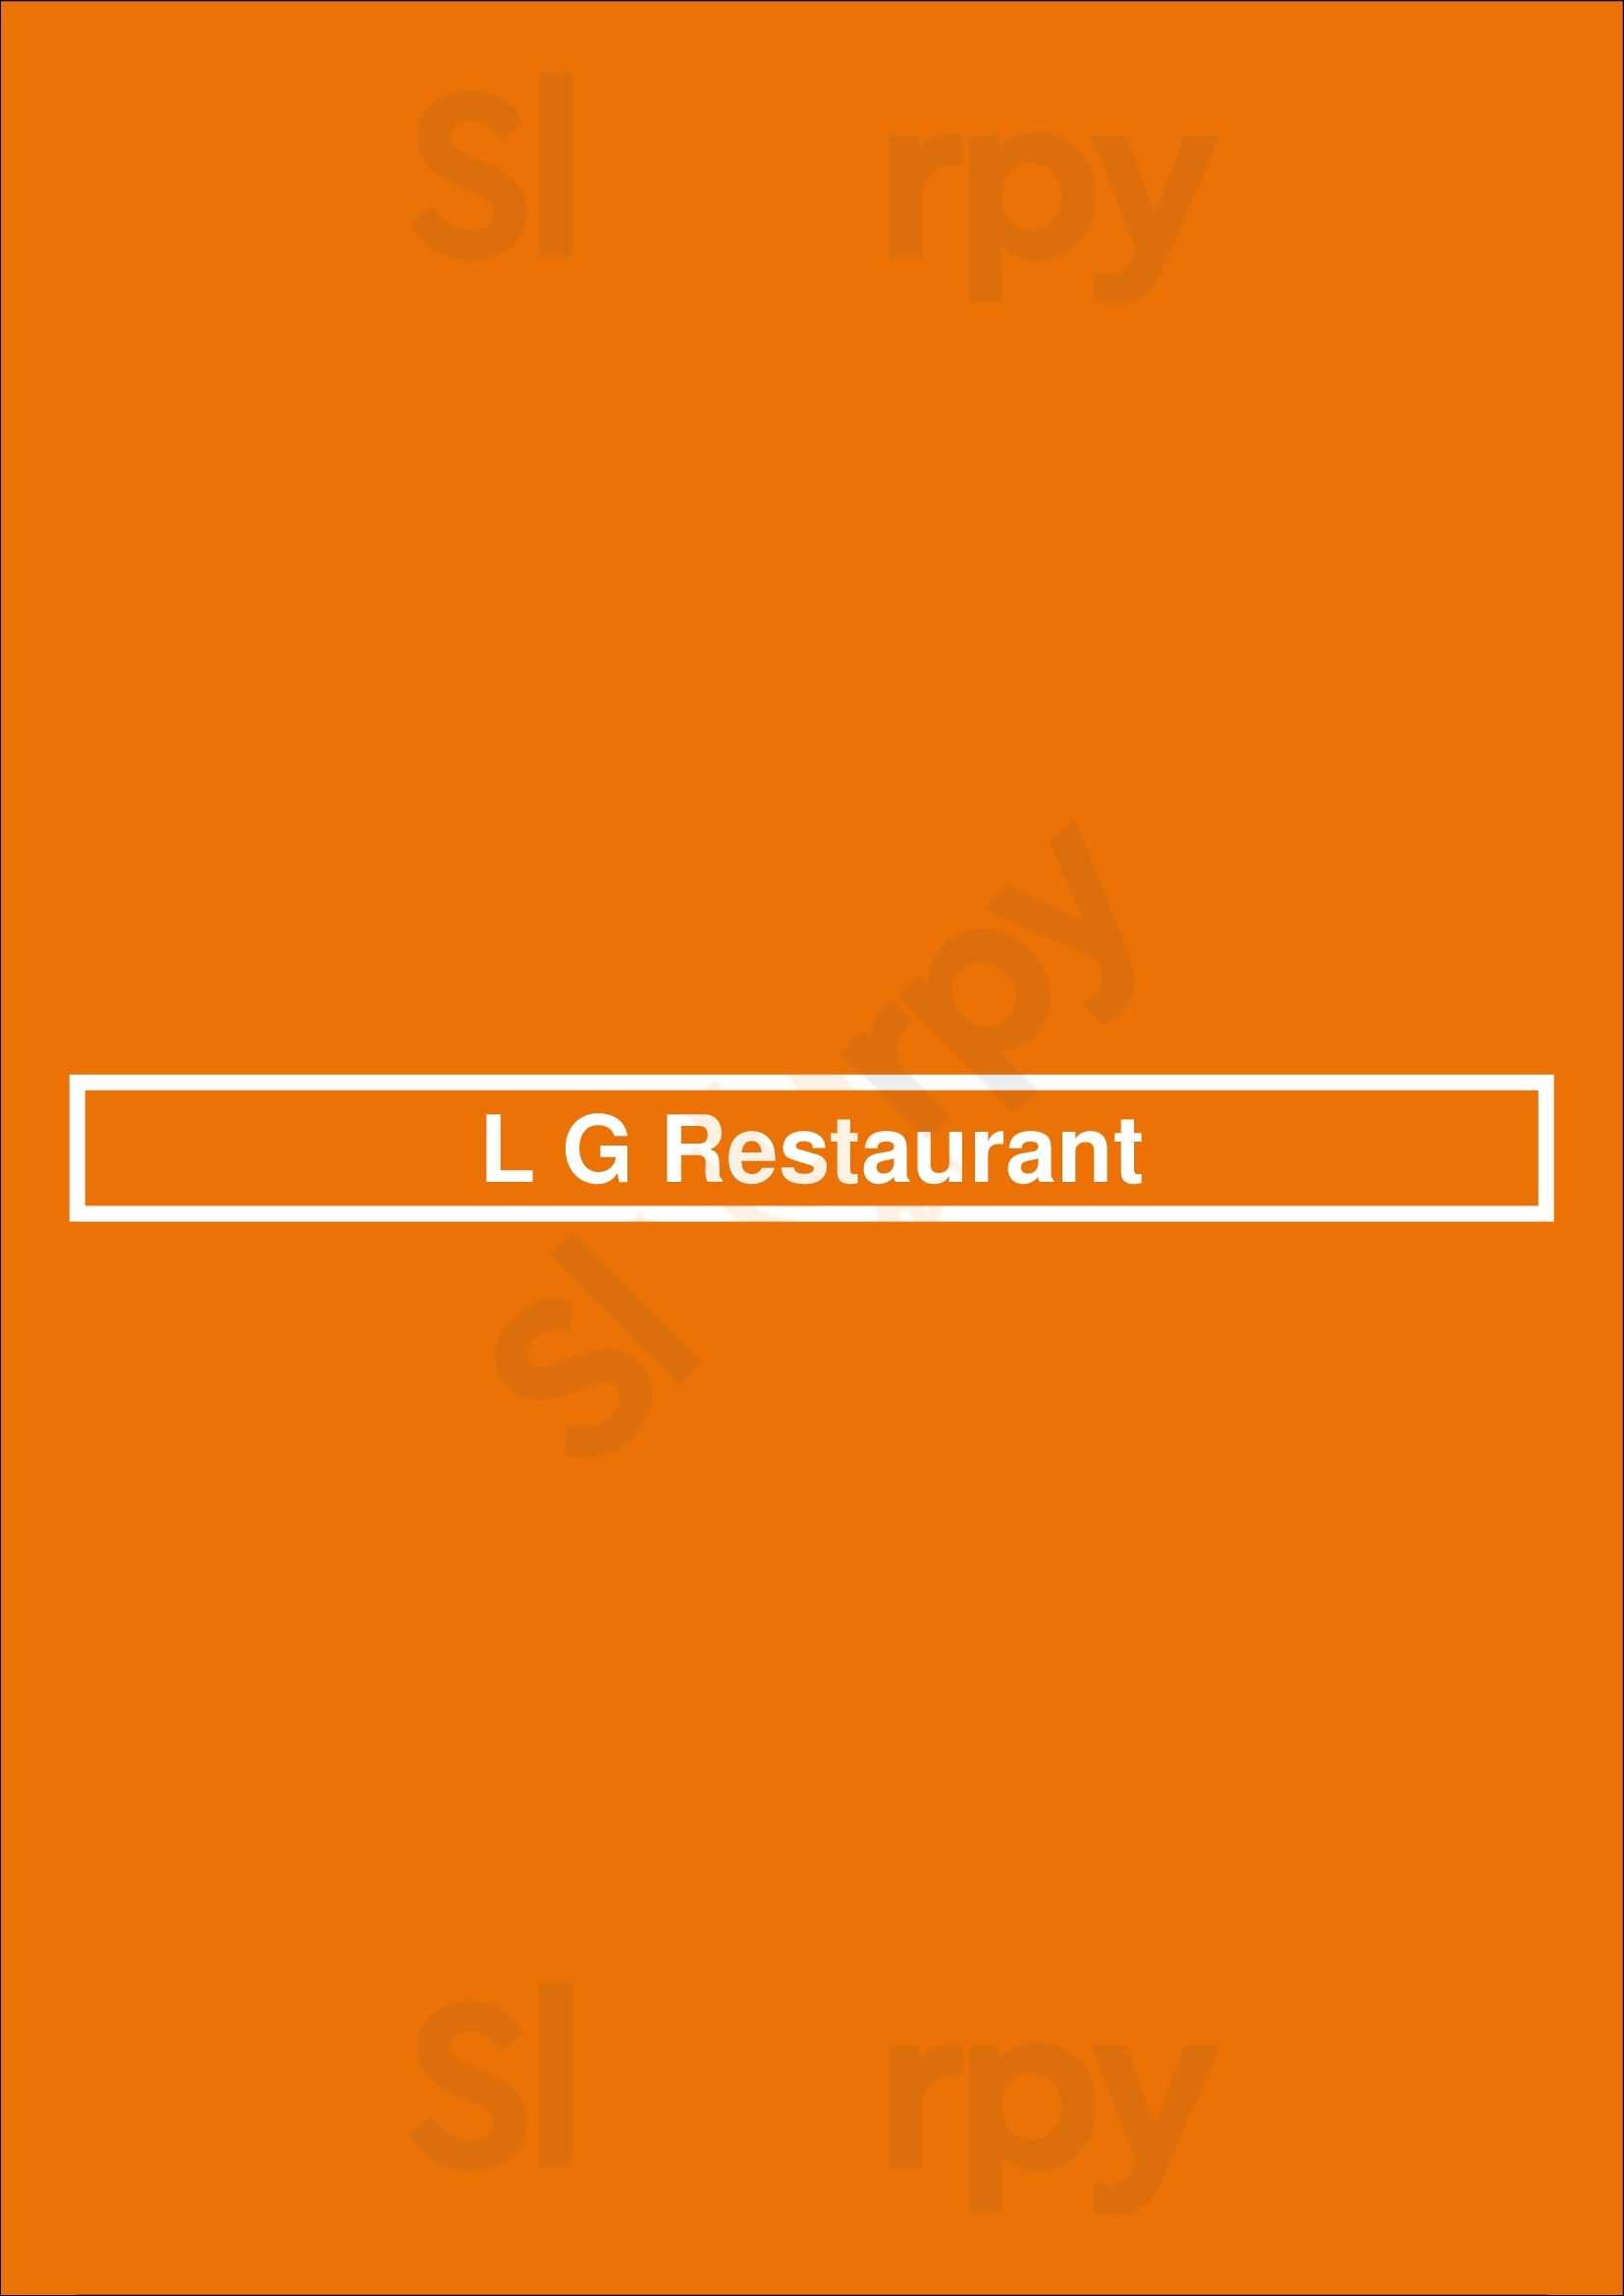 L G Restaurant Chicago Menu - 1